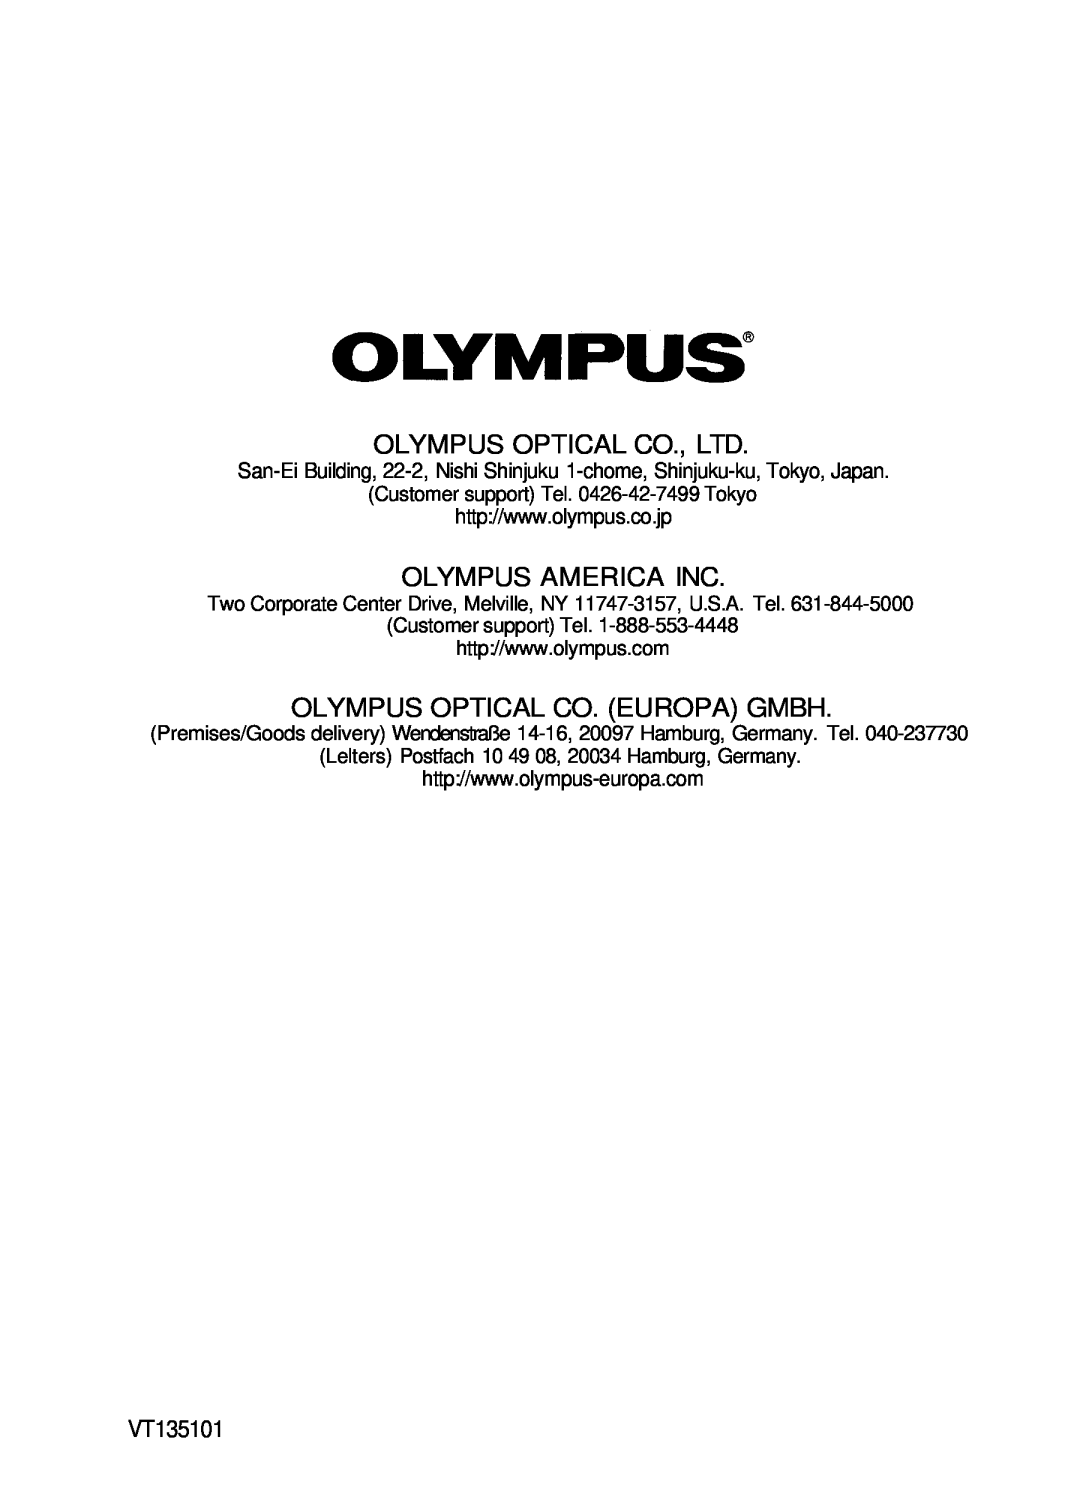 Olympus P-200 manual Olympus America Inc, Olympus Optical Co. Europa Gmbh, VT135101 